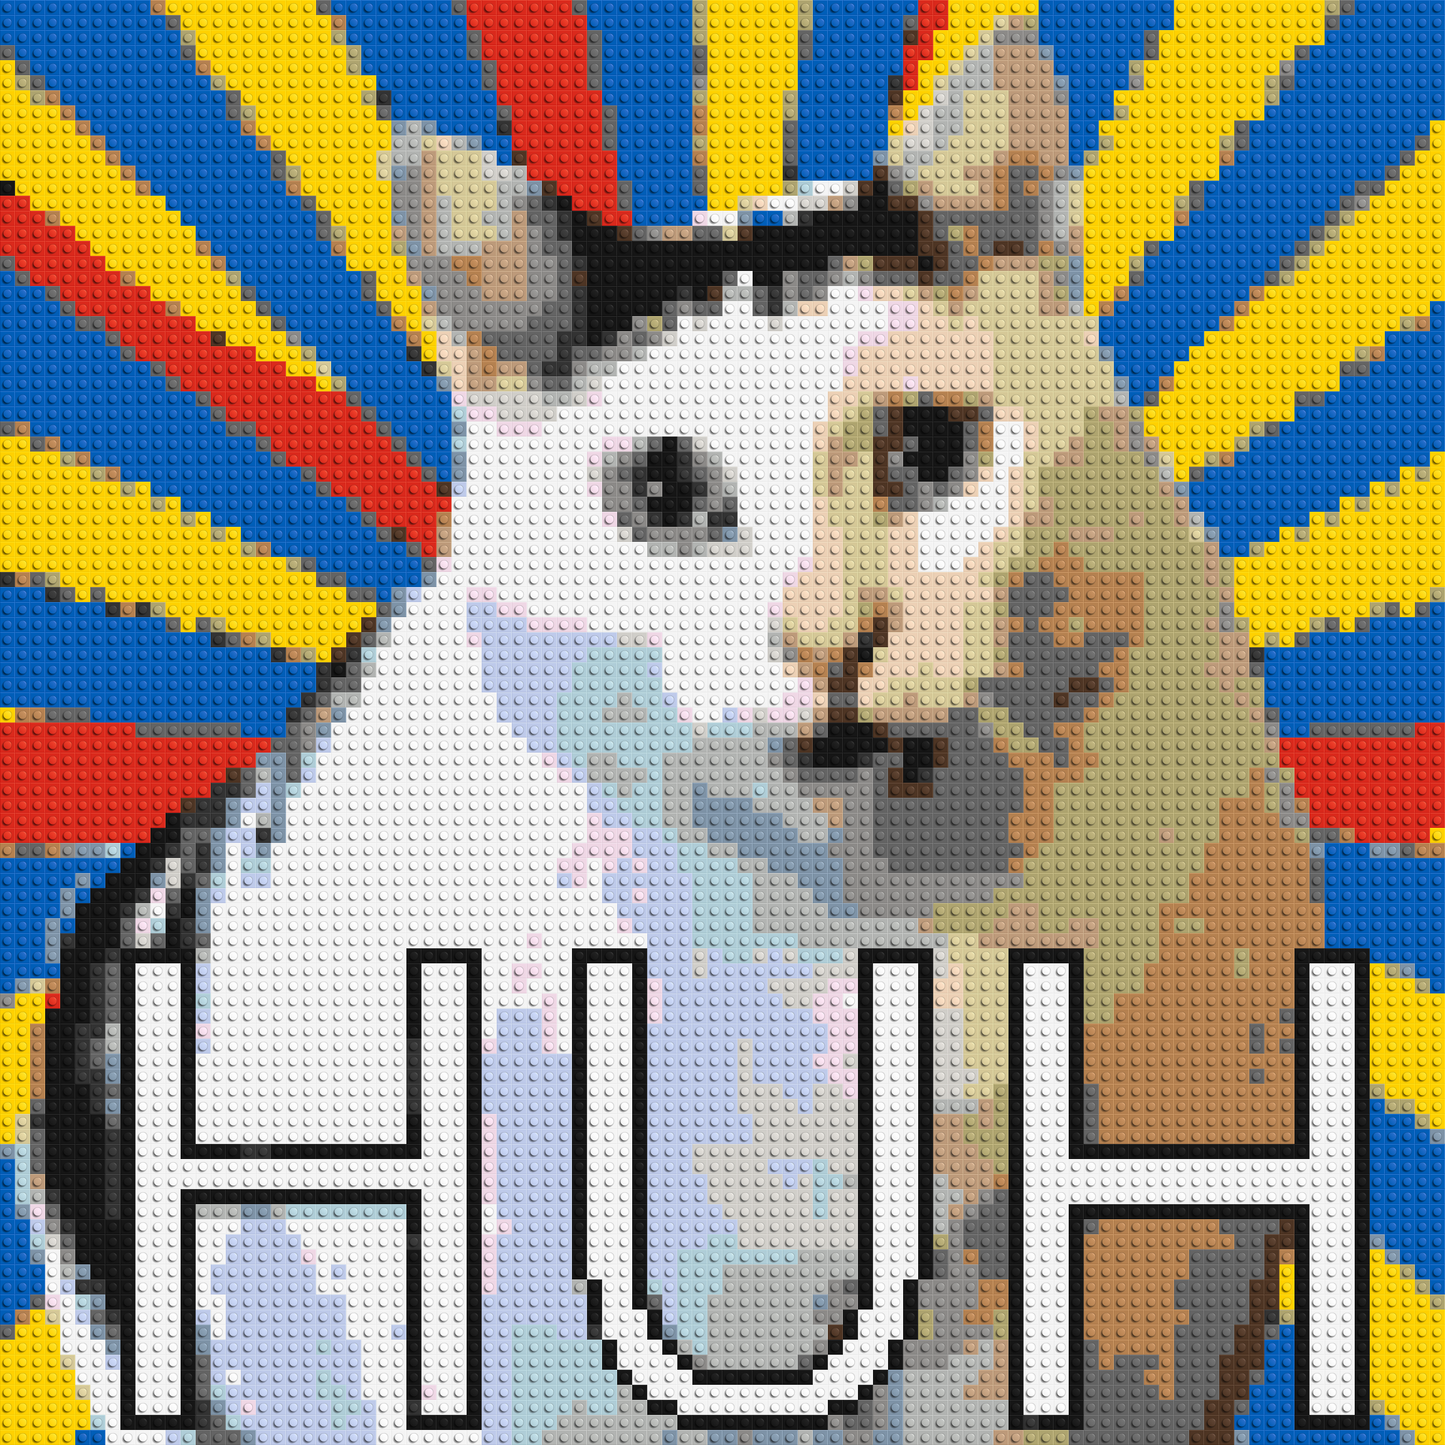 Huh Cat Meme - Brick Art Mosaic Kit 4x4 large